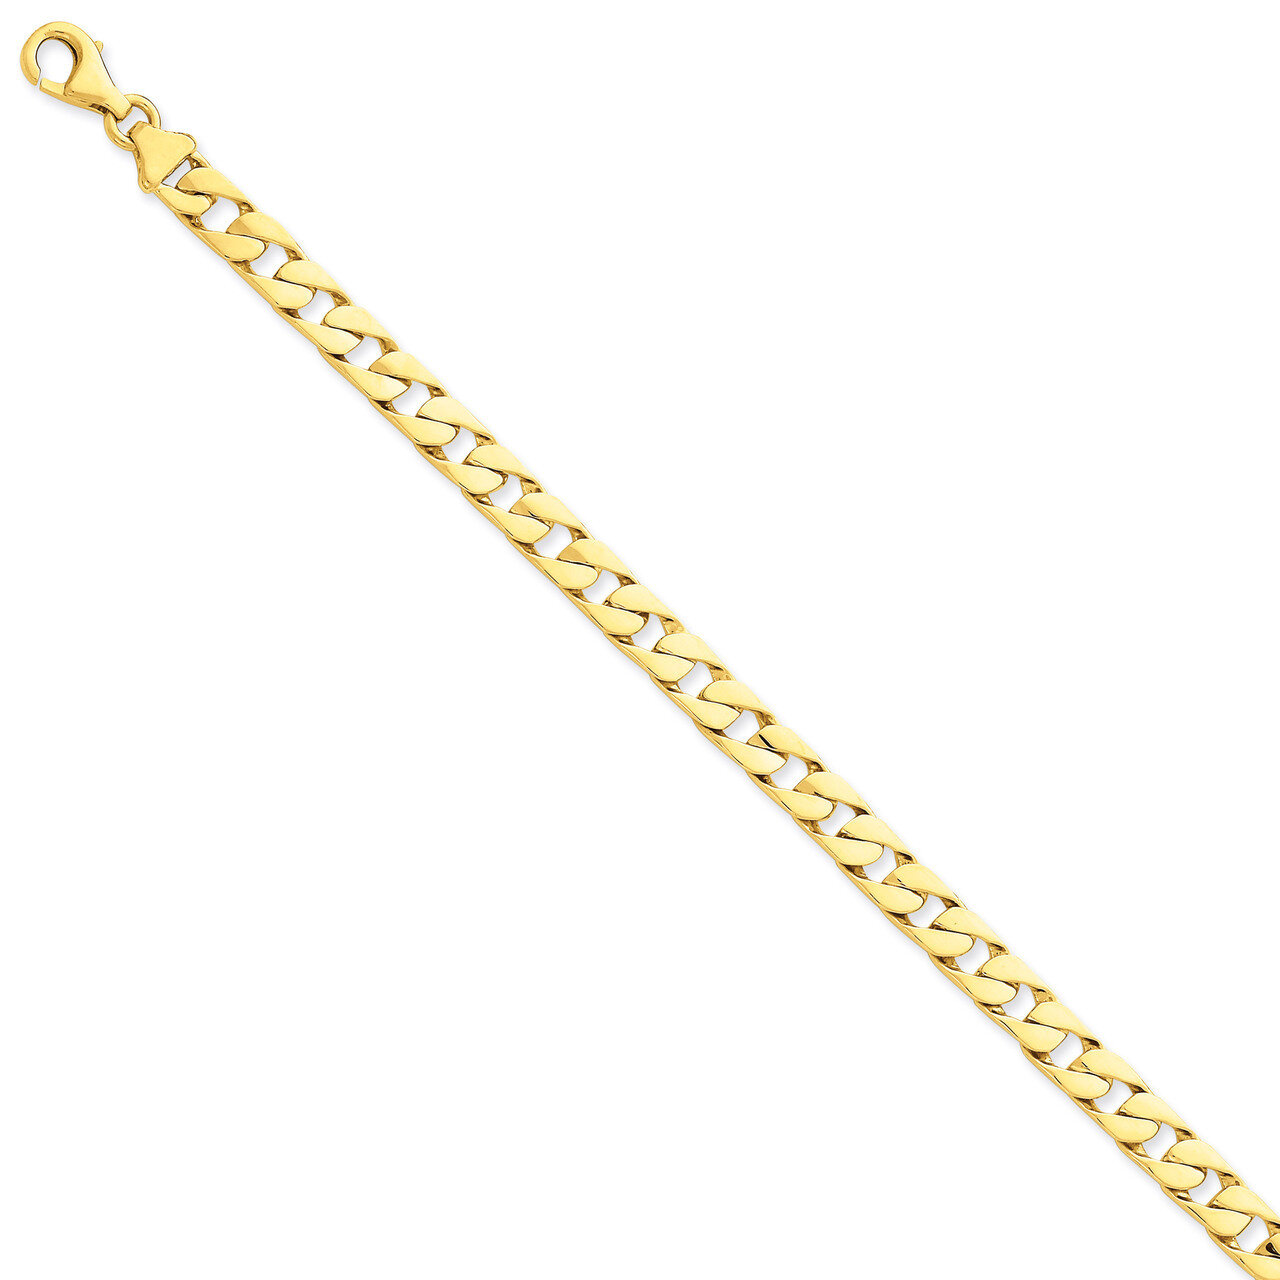 6.5mm Hand-Polished Fancy Link Chain 22 Inch 14k Gold LK147-22